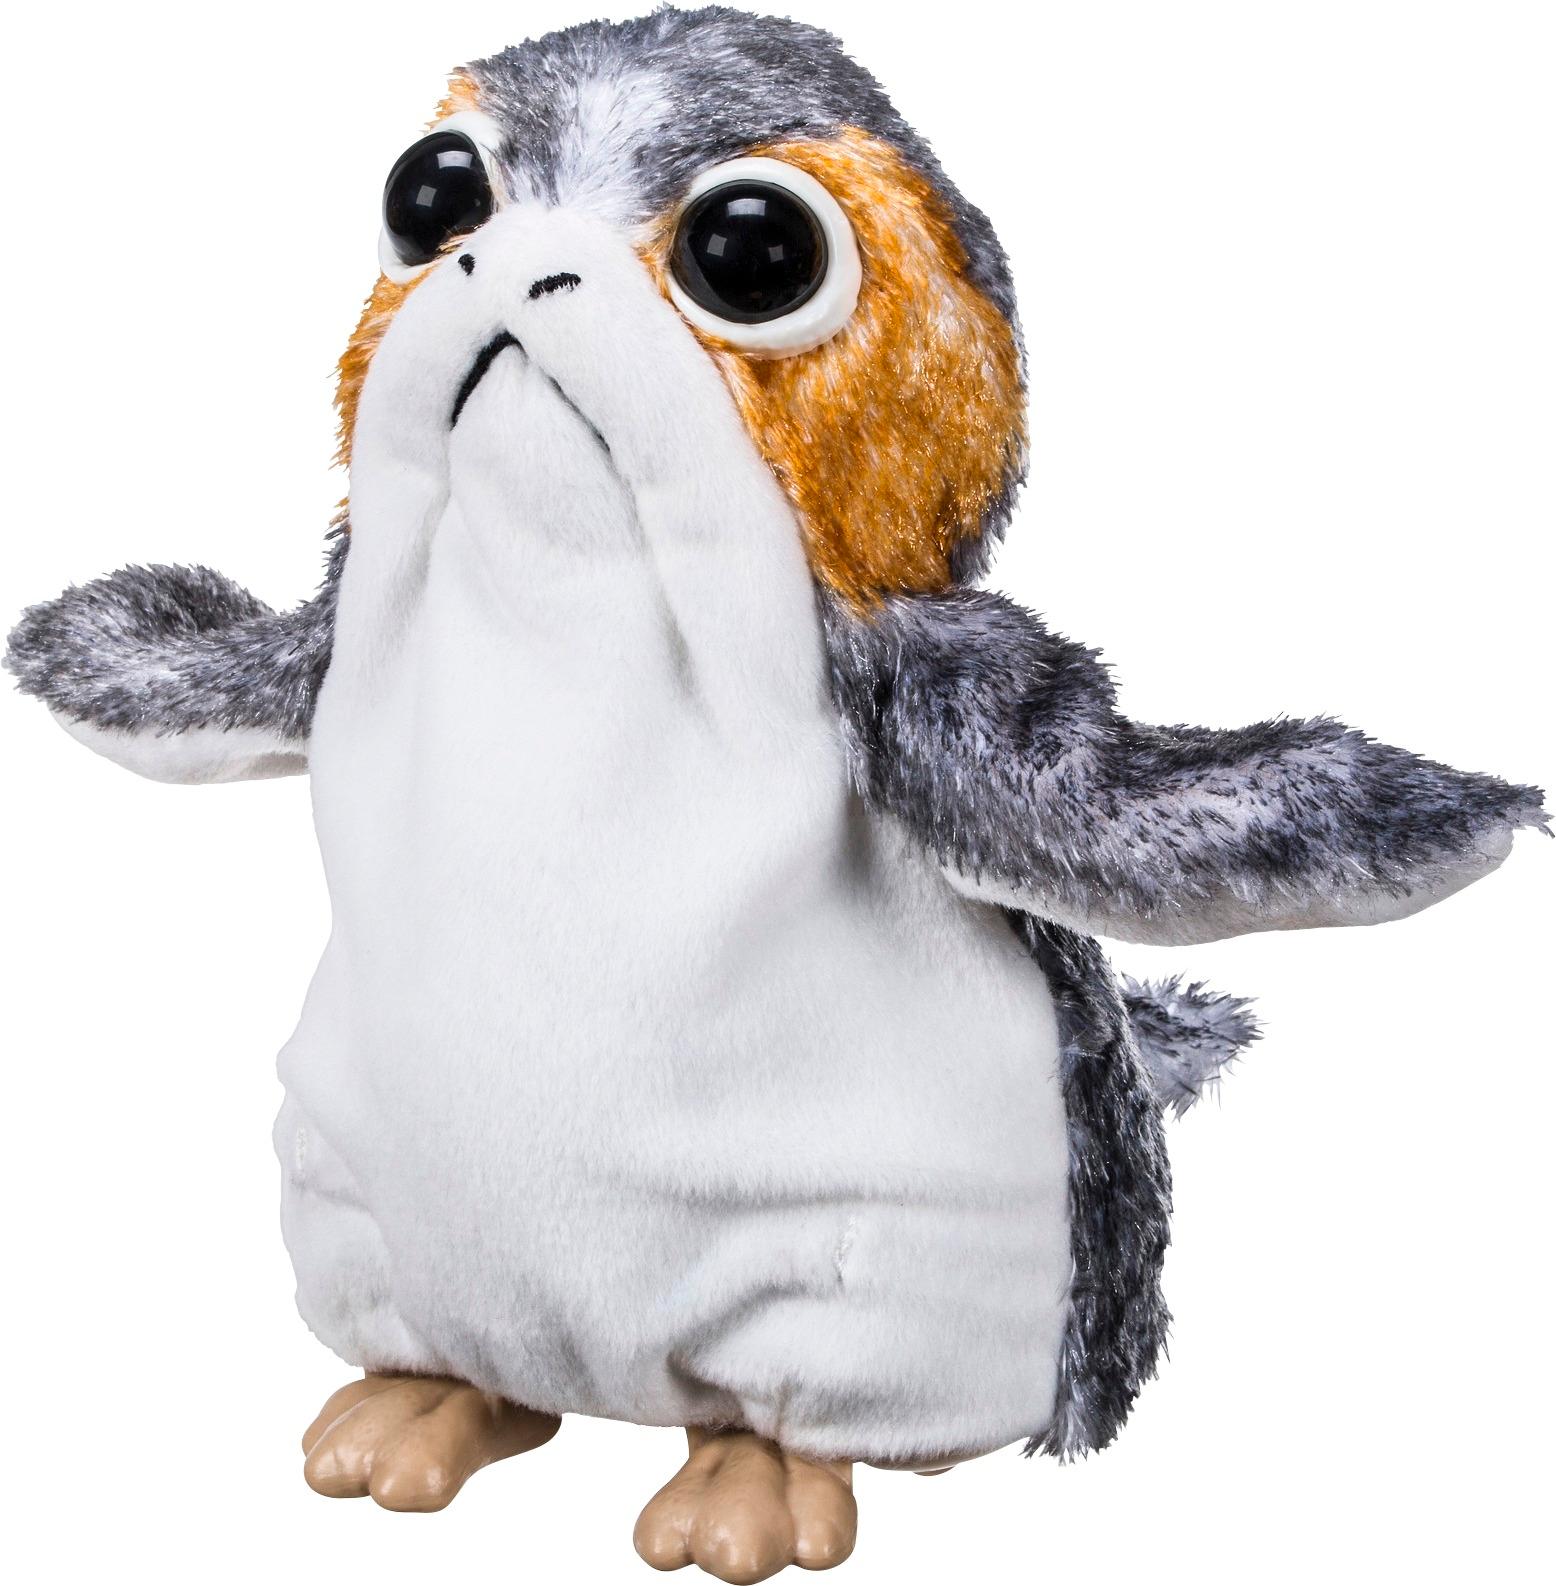 Hasbro Star Wars The Last Jedi Porg Penguin Electronic Talking Plush C1942 for sale online